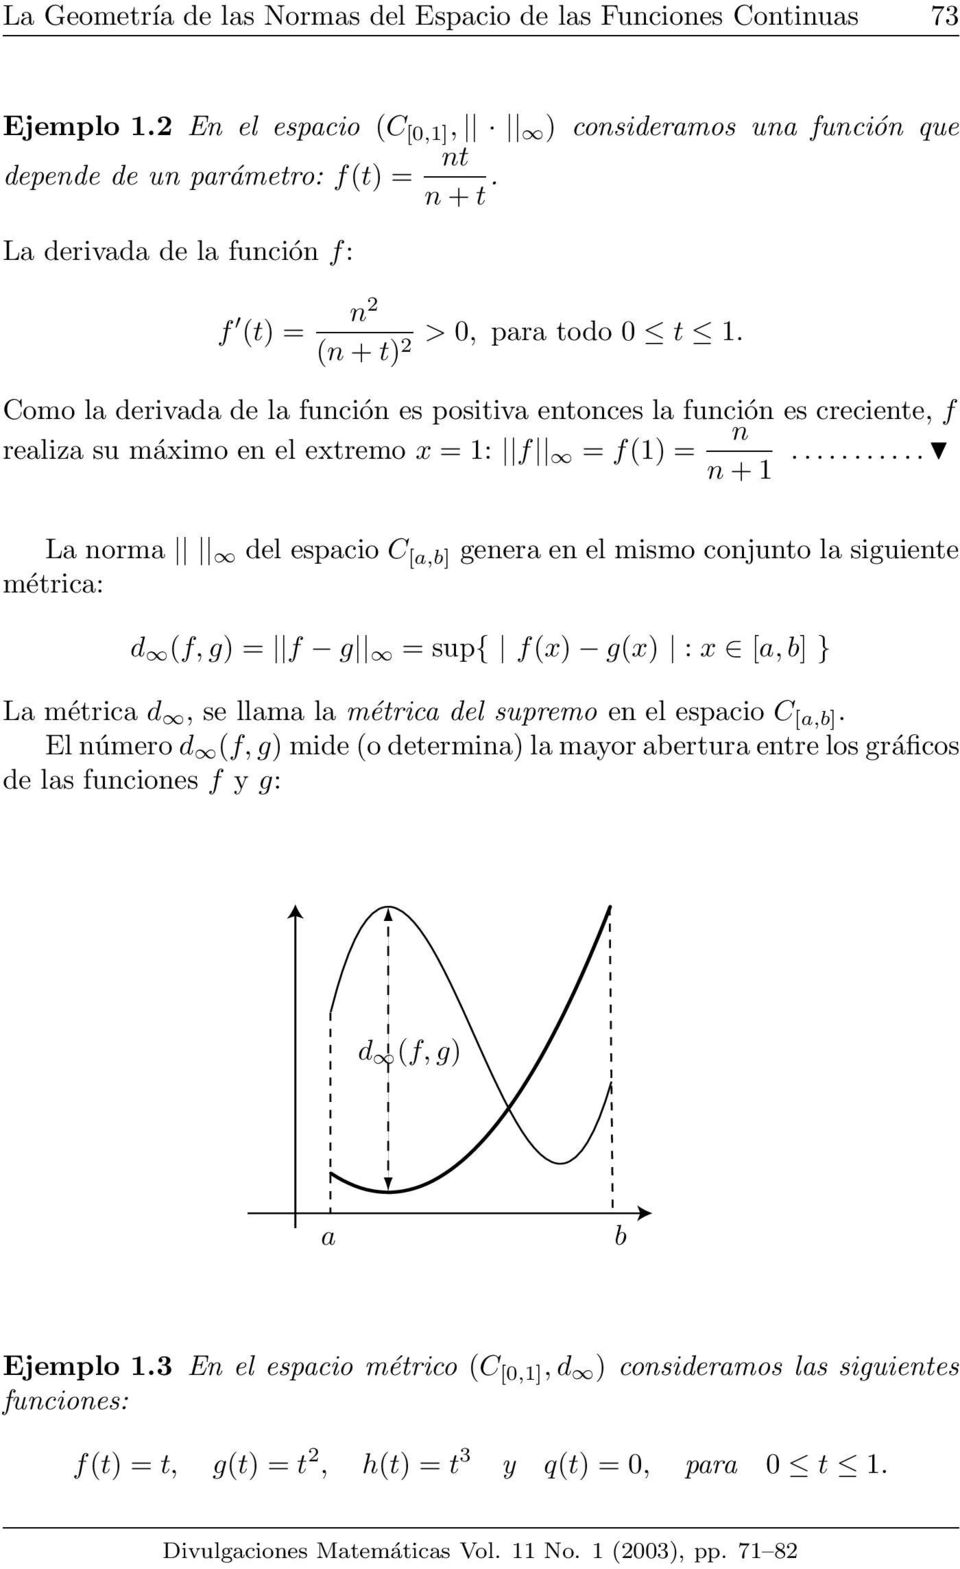 ... L norm del espcio C [,b] gener en el mismo conjunto l siguiente métric: d (f, g) = f g = sup{ f(x) g(x) : x [, b] } L métric d, se llm l métric del supremo en el espcio C [,b].